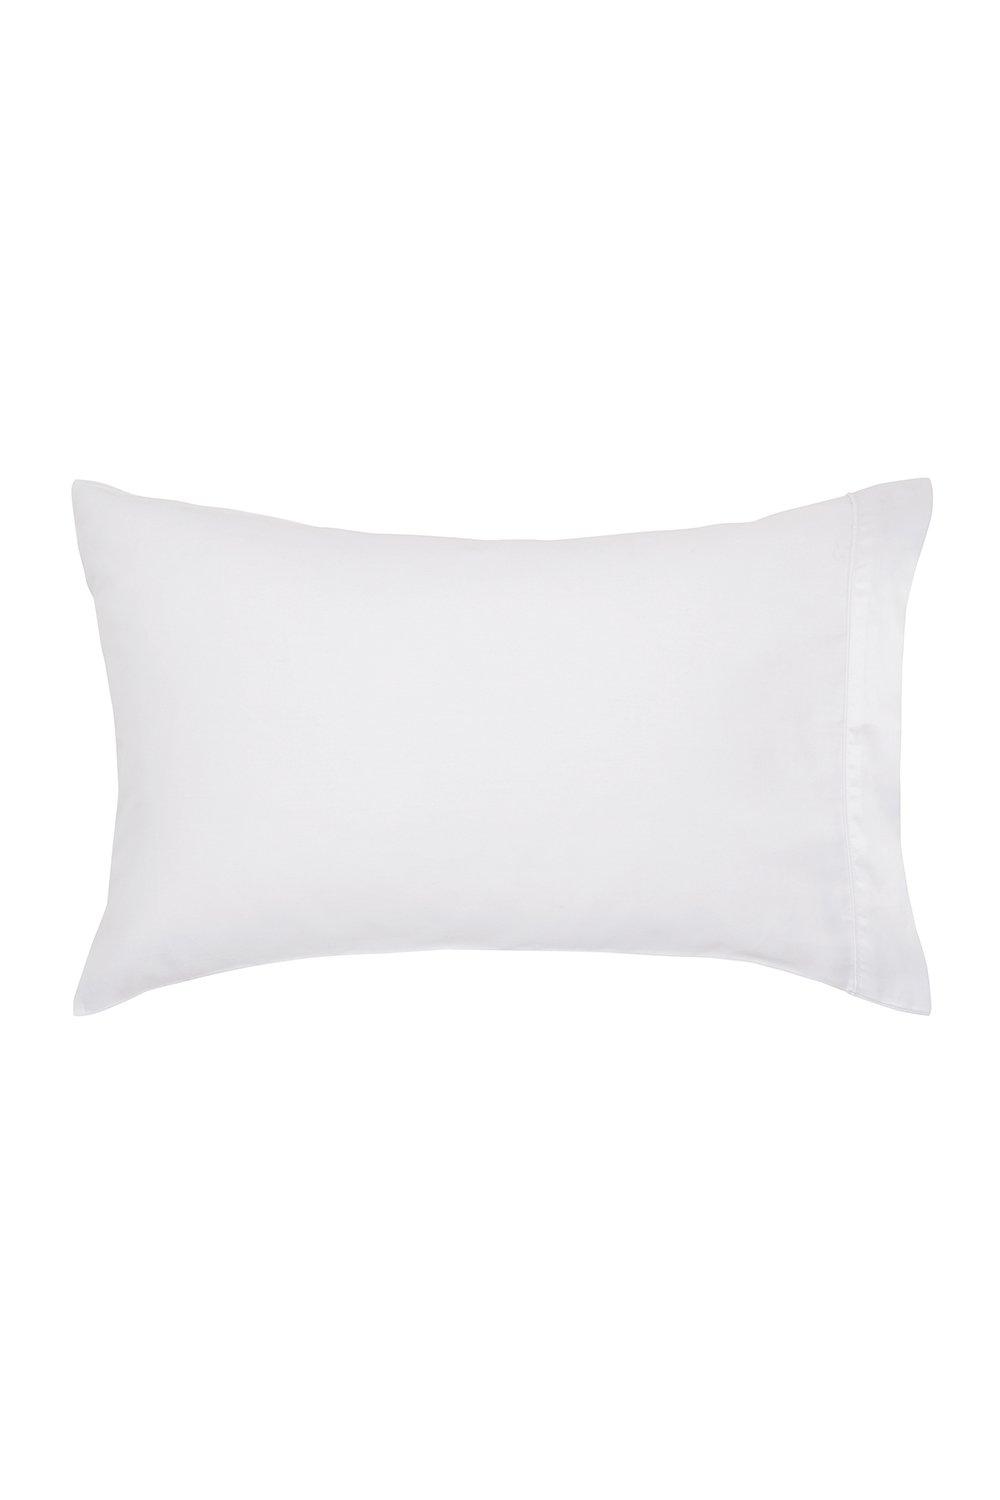 'Eastern Palace' Egyptian Cotton Standard Pillowcase